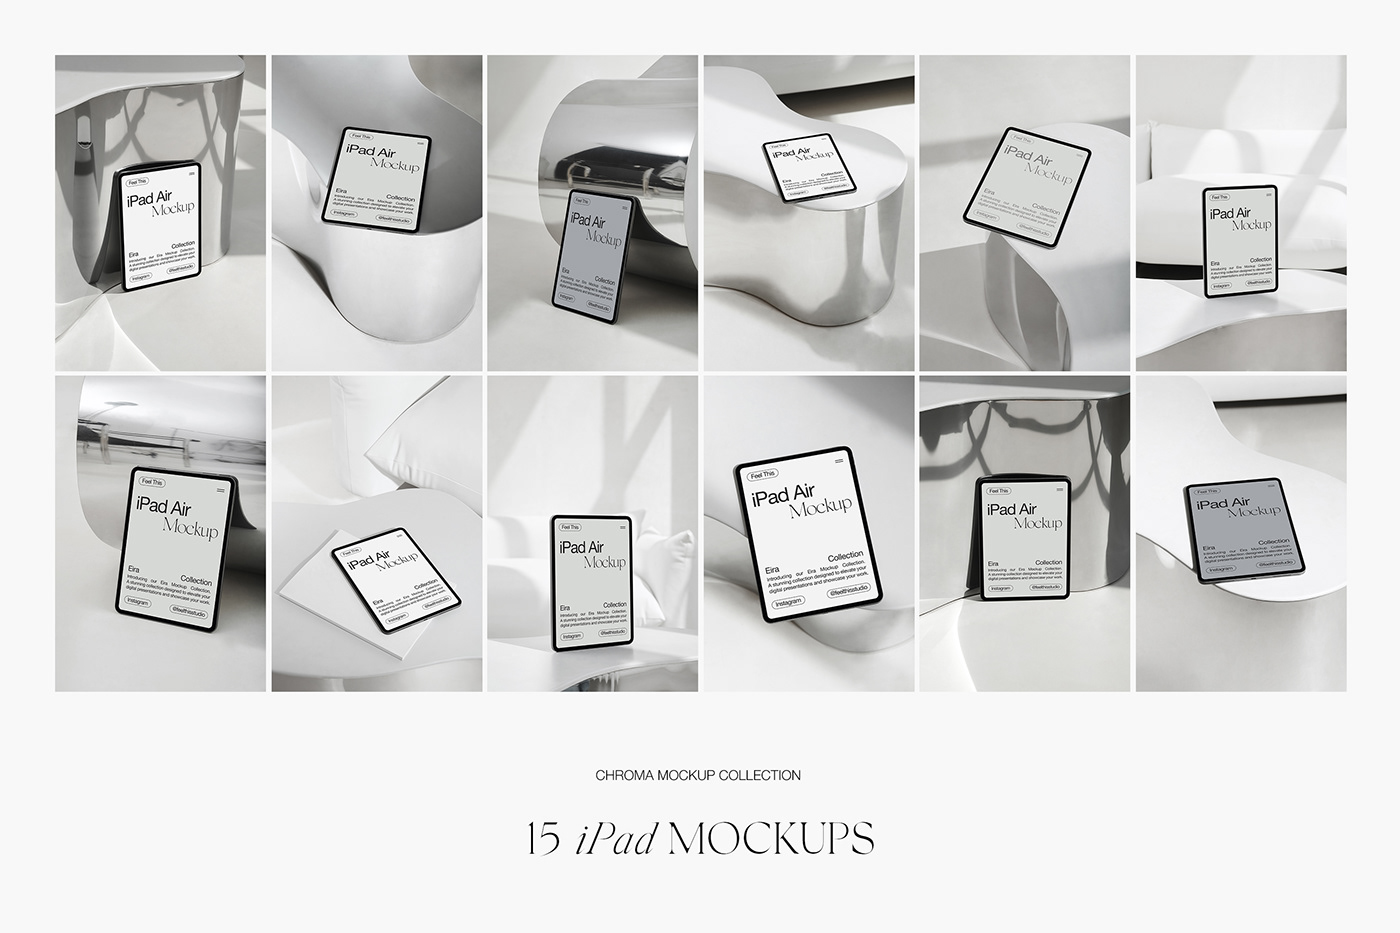 iphone iPad macbook poster Mockup mockups psd download free freebie